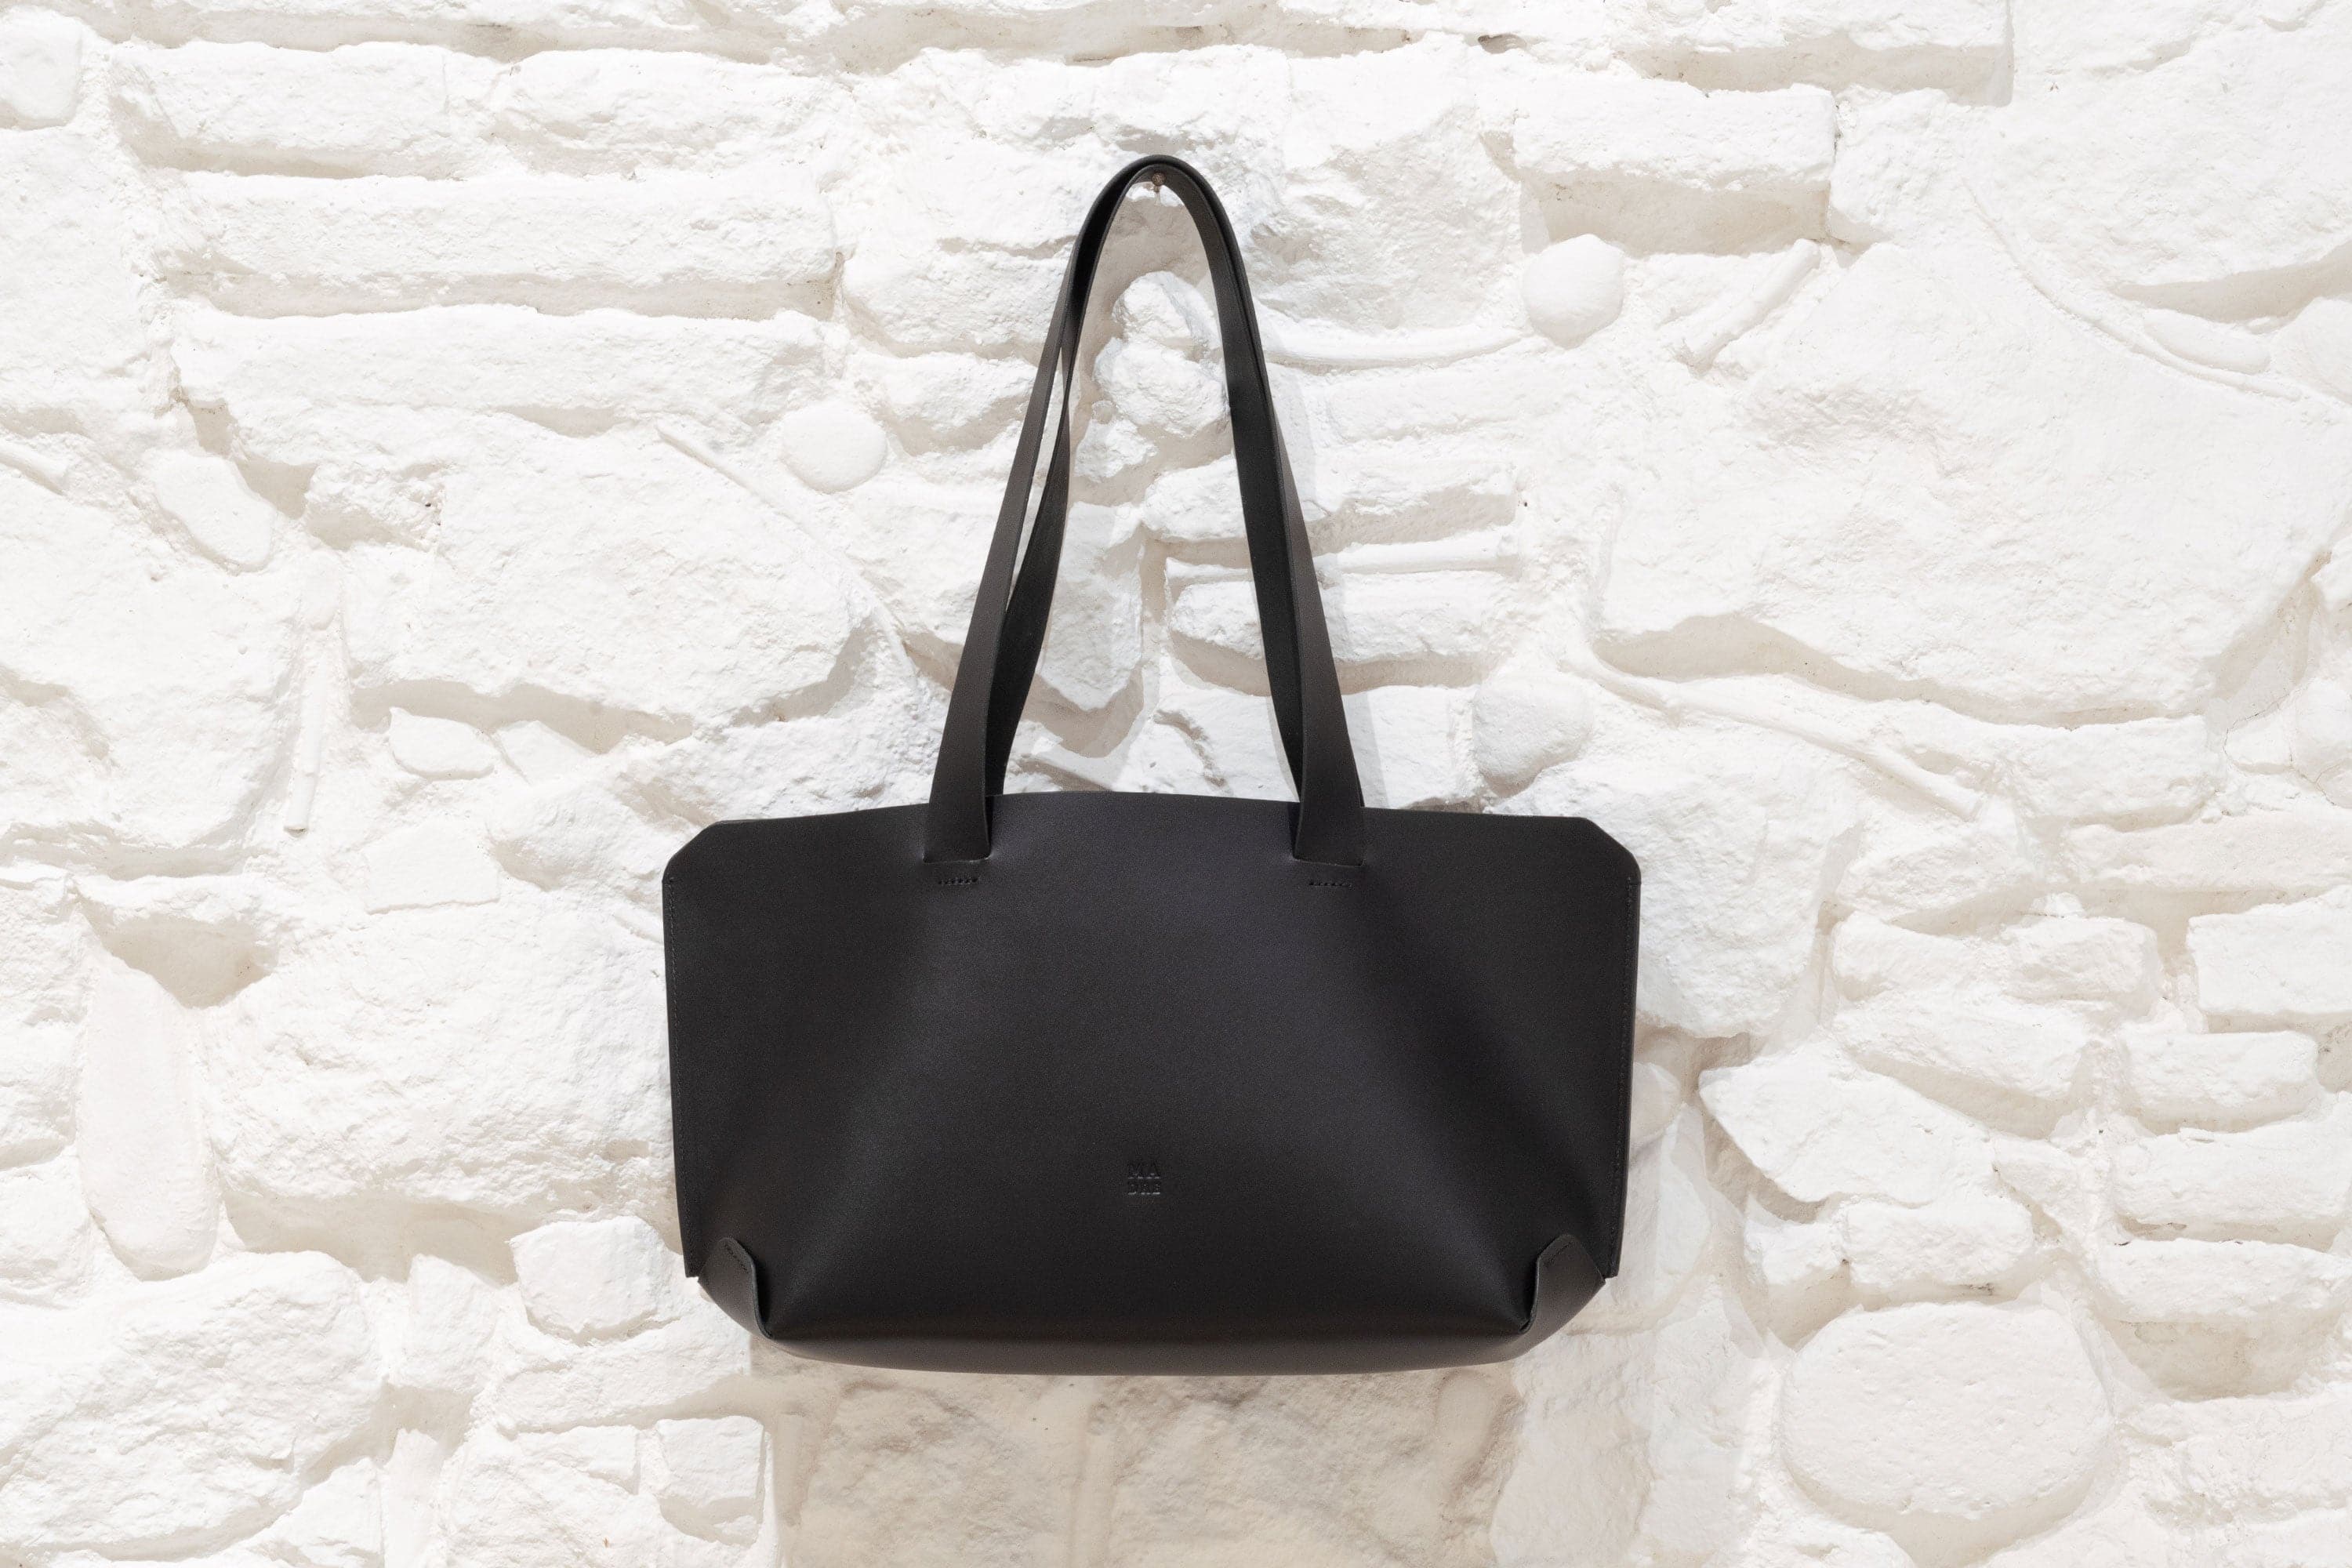 Tote Bag Black Color Vegtan Leather Novillo German Minimalism Design By Manuel Dreesmann Atelier Madre Barcelona Spain